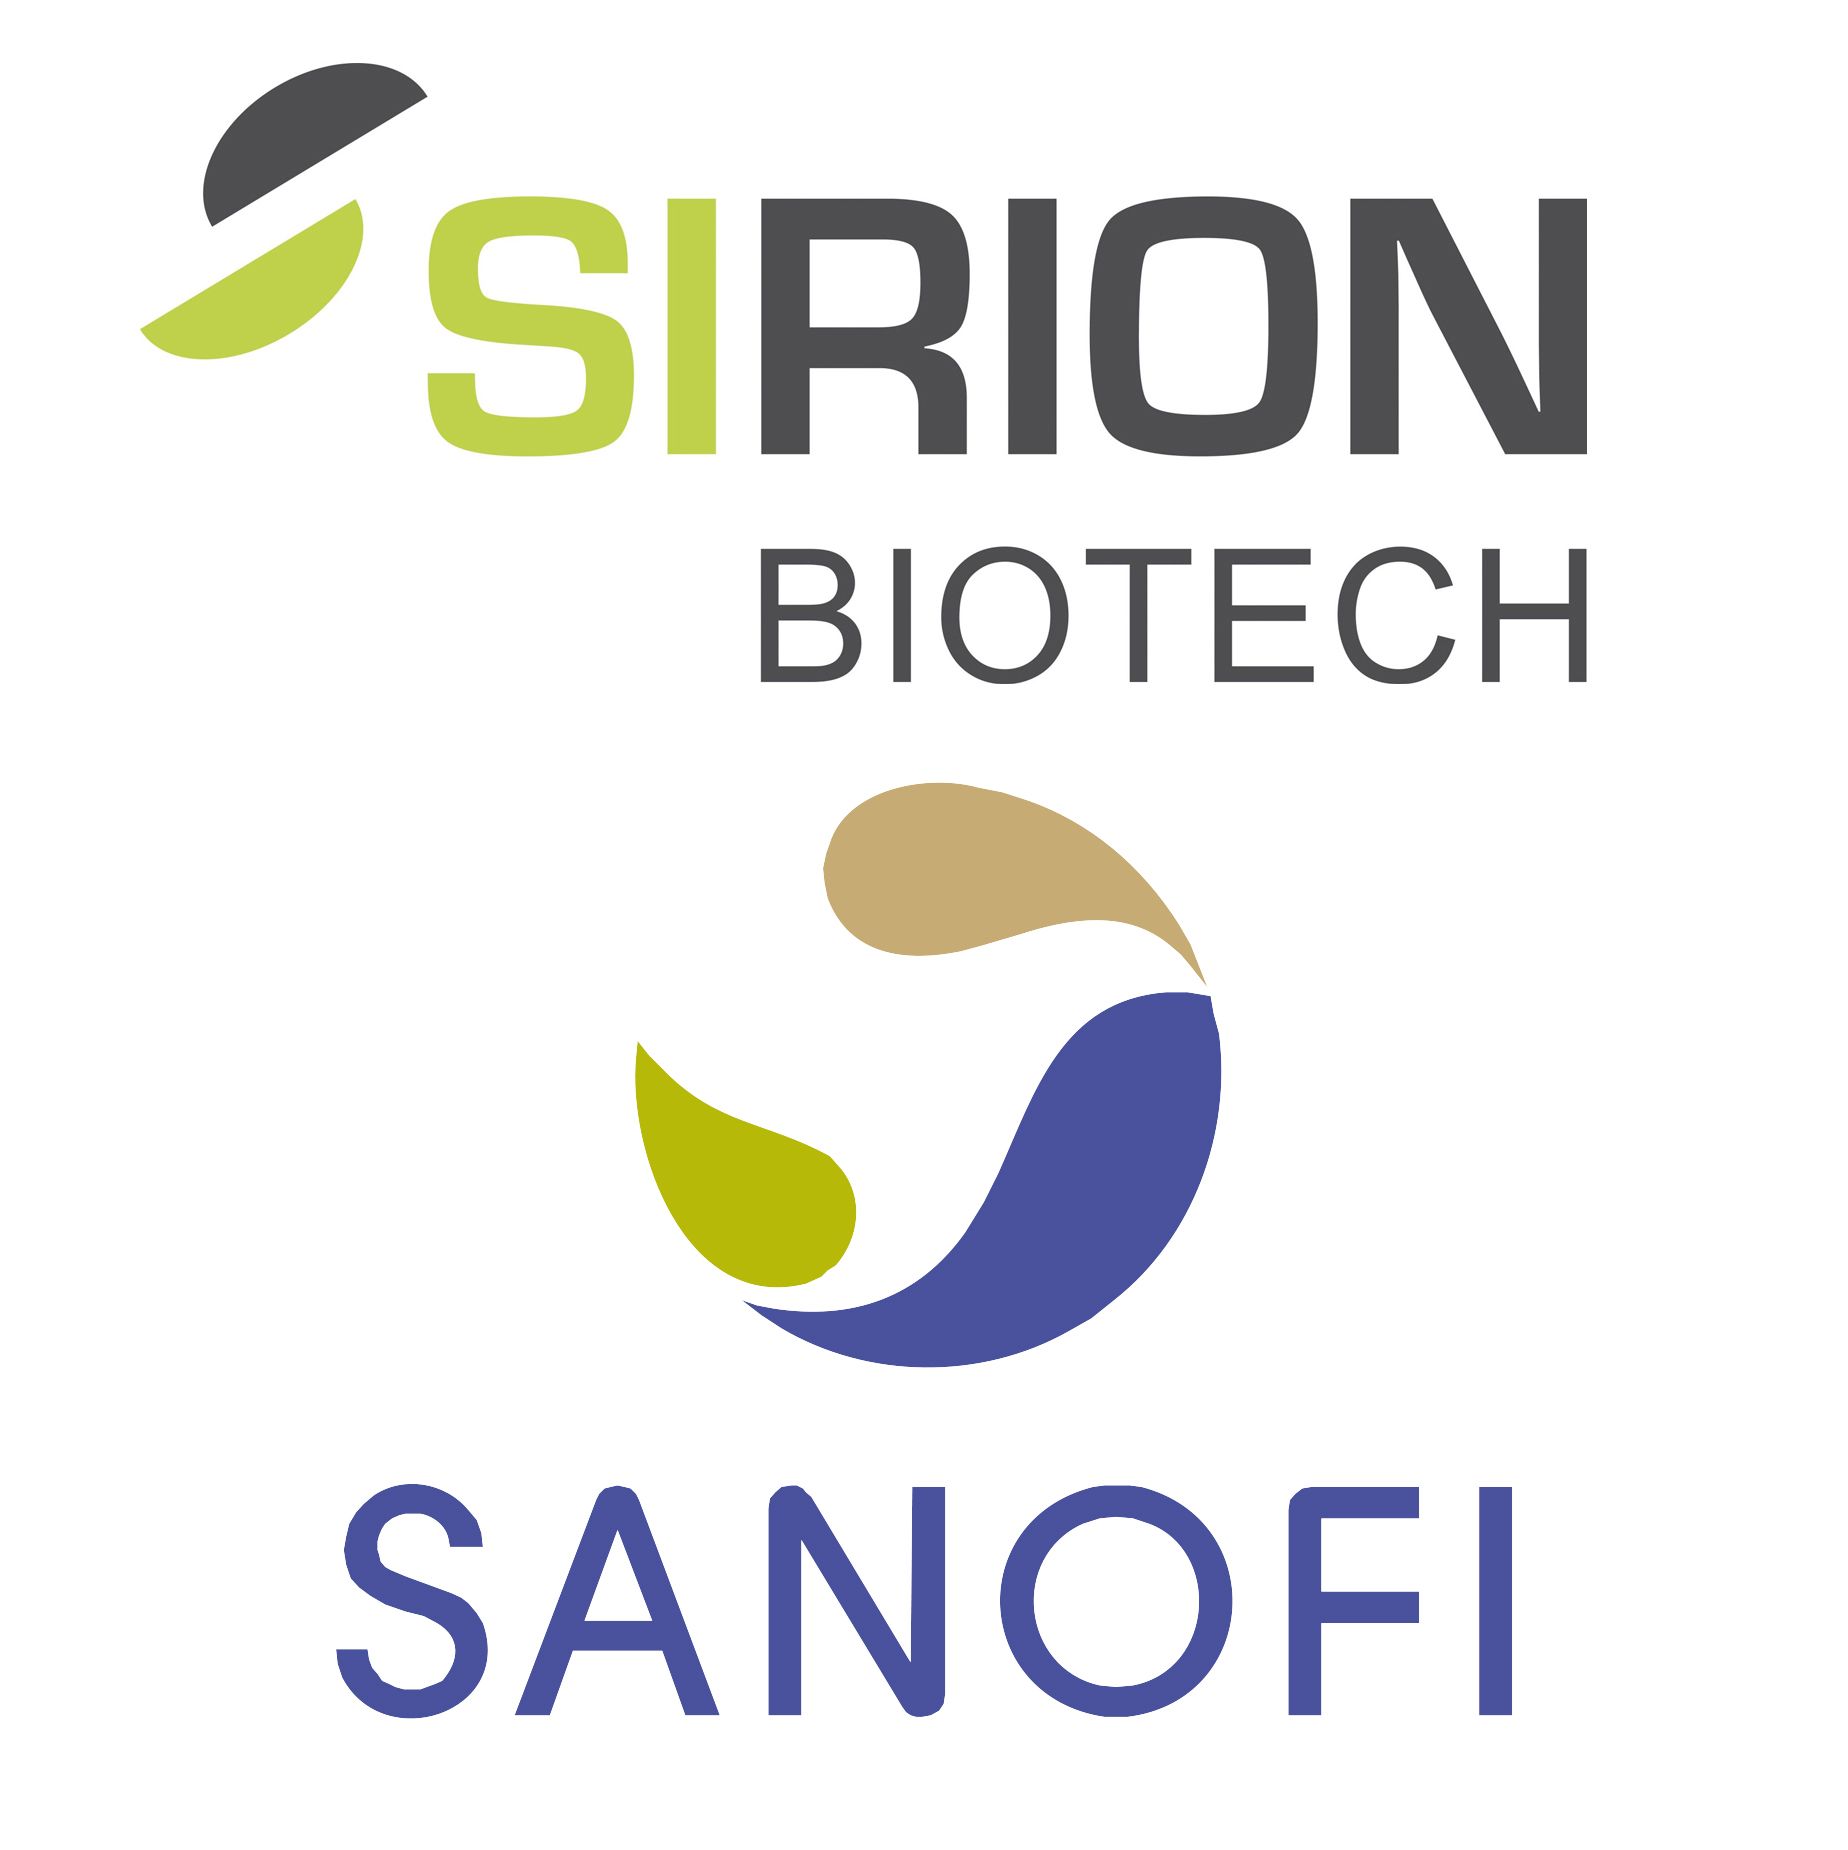 SIRION and Sanofi logos